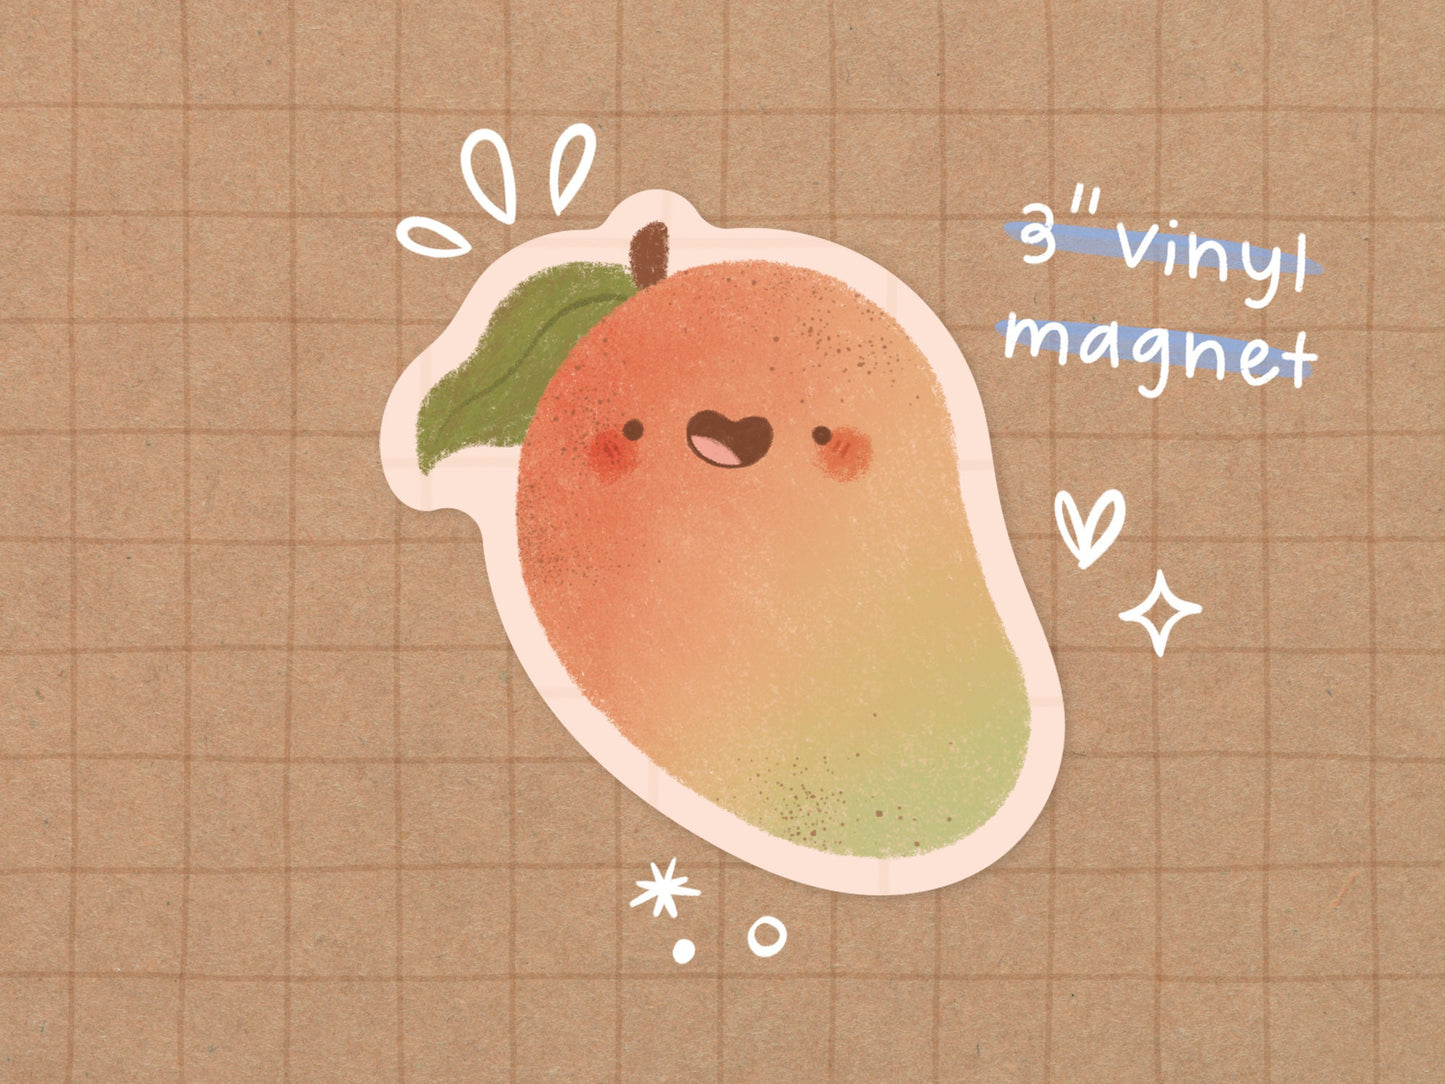 Mango Vinyl Magnet